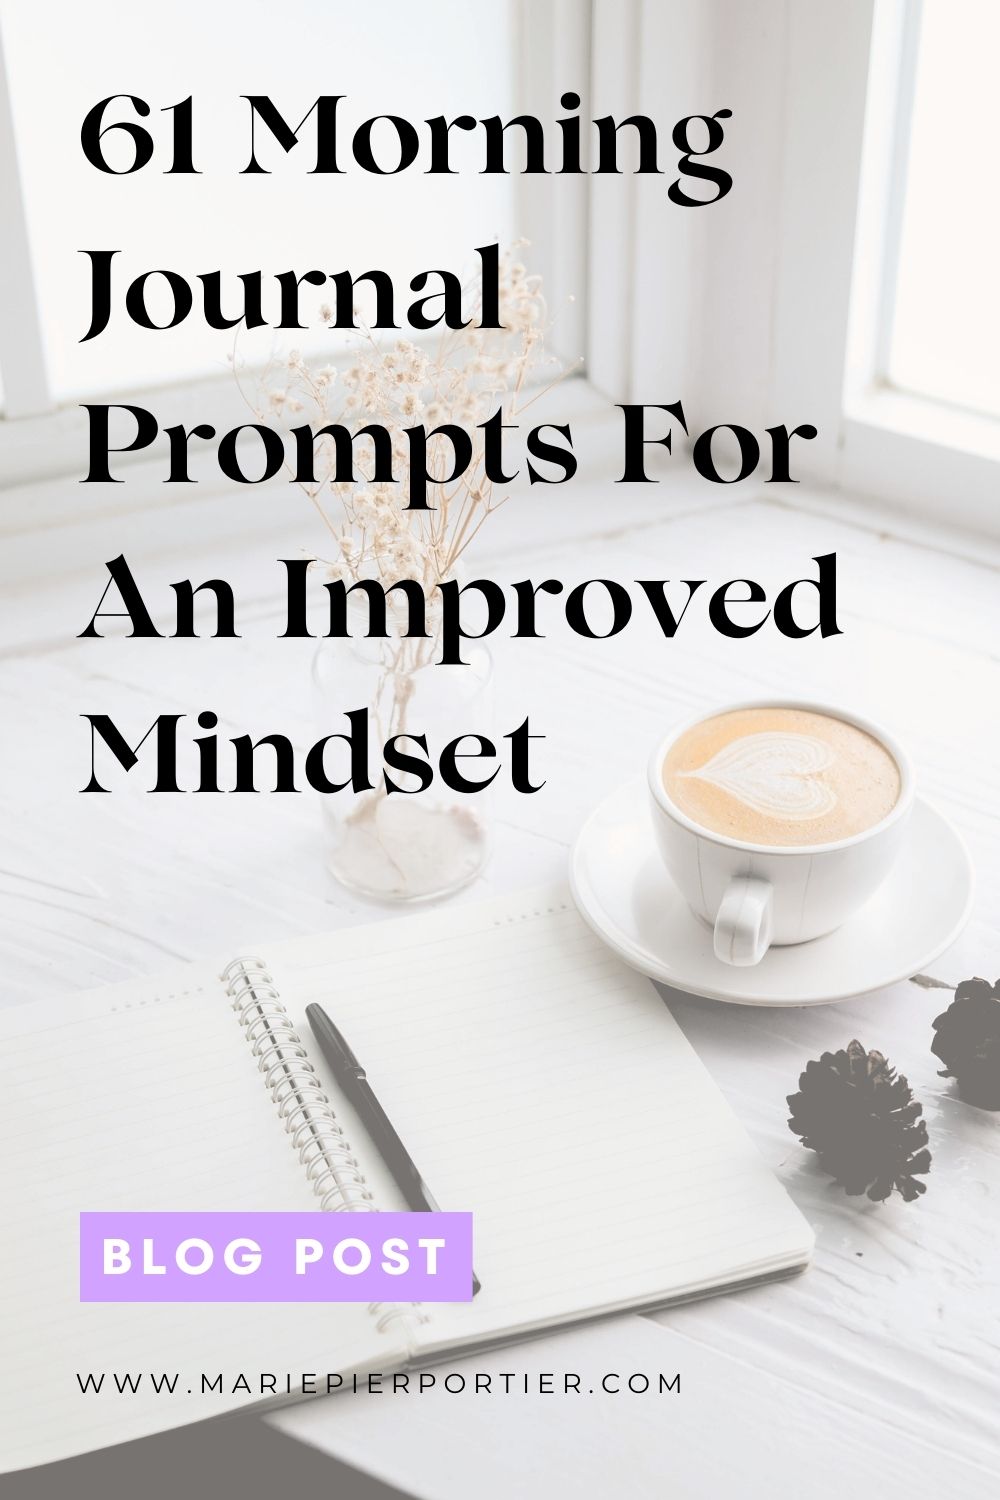 61 Morning Journal Prompts for an Improved Mindset